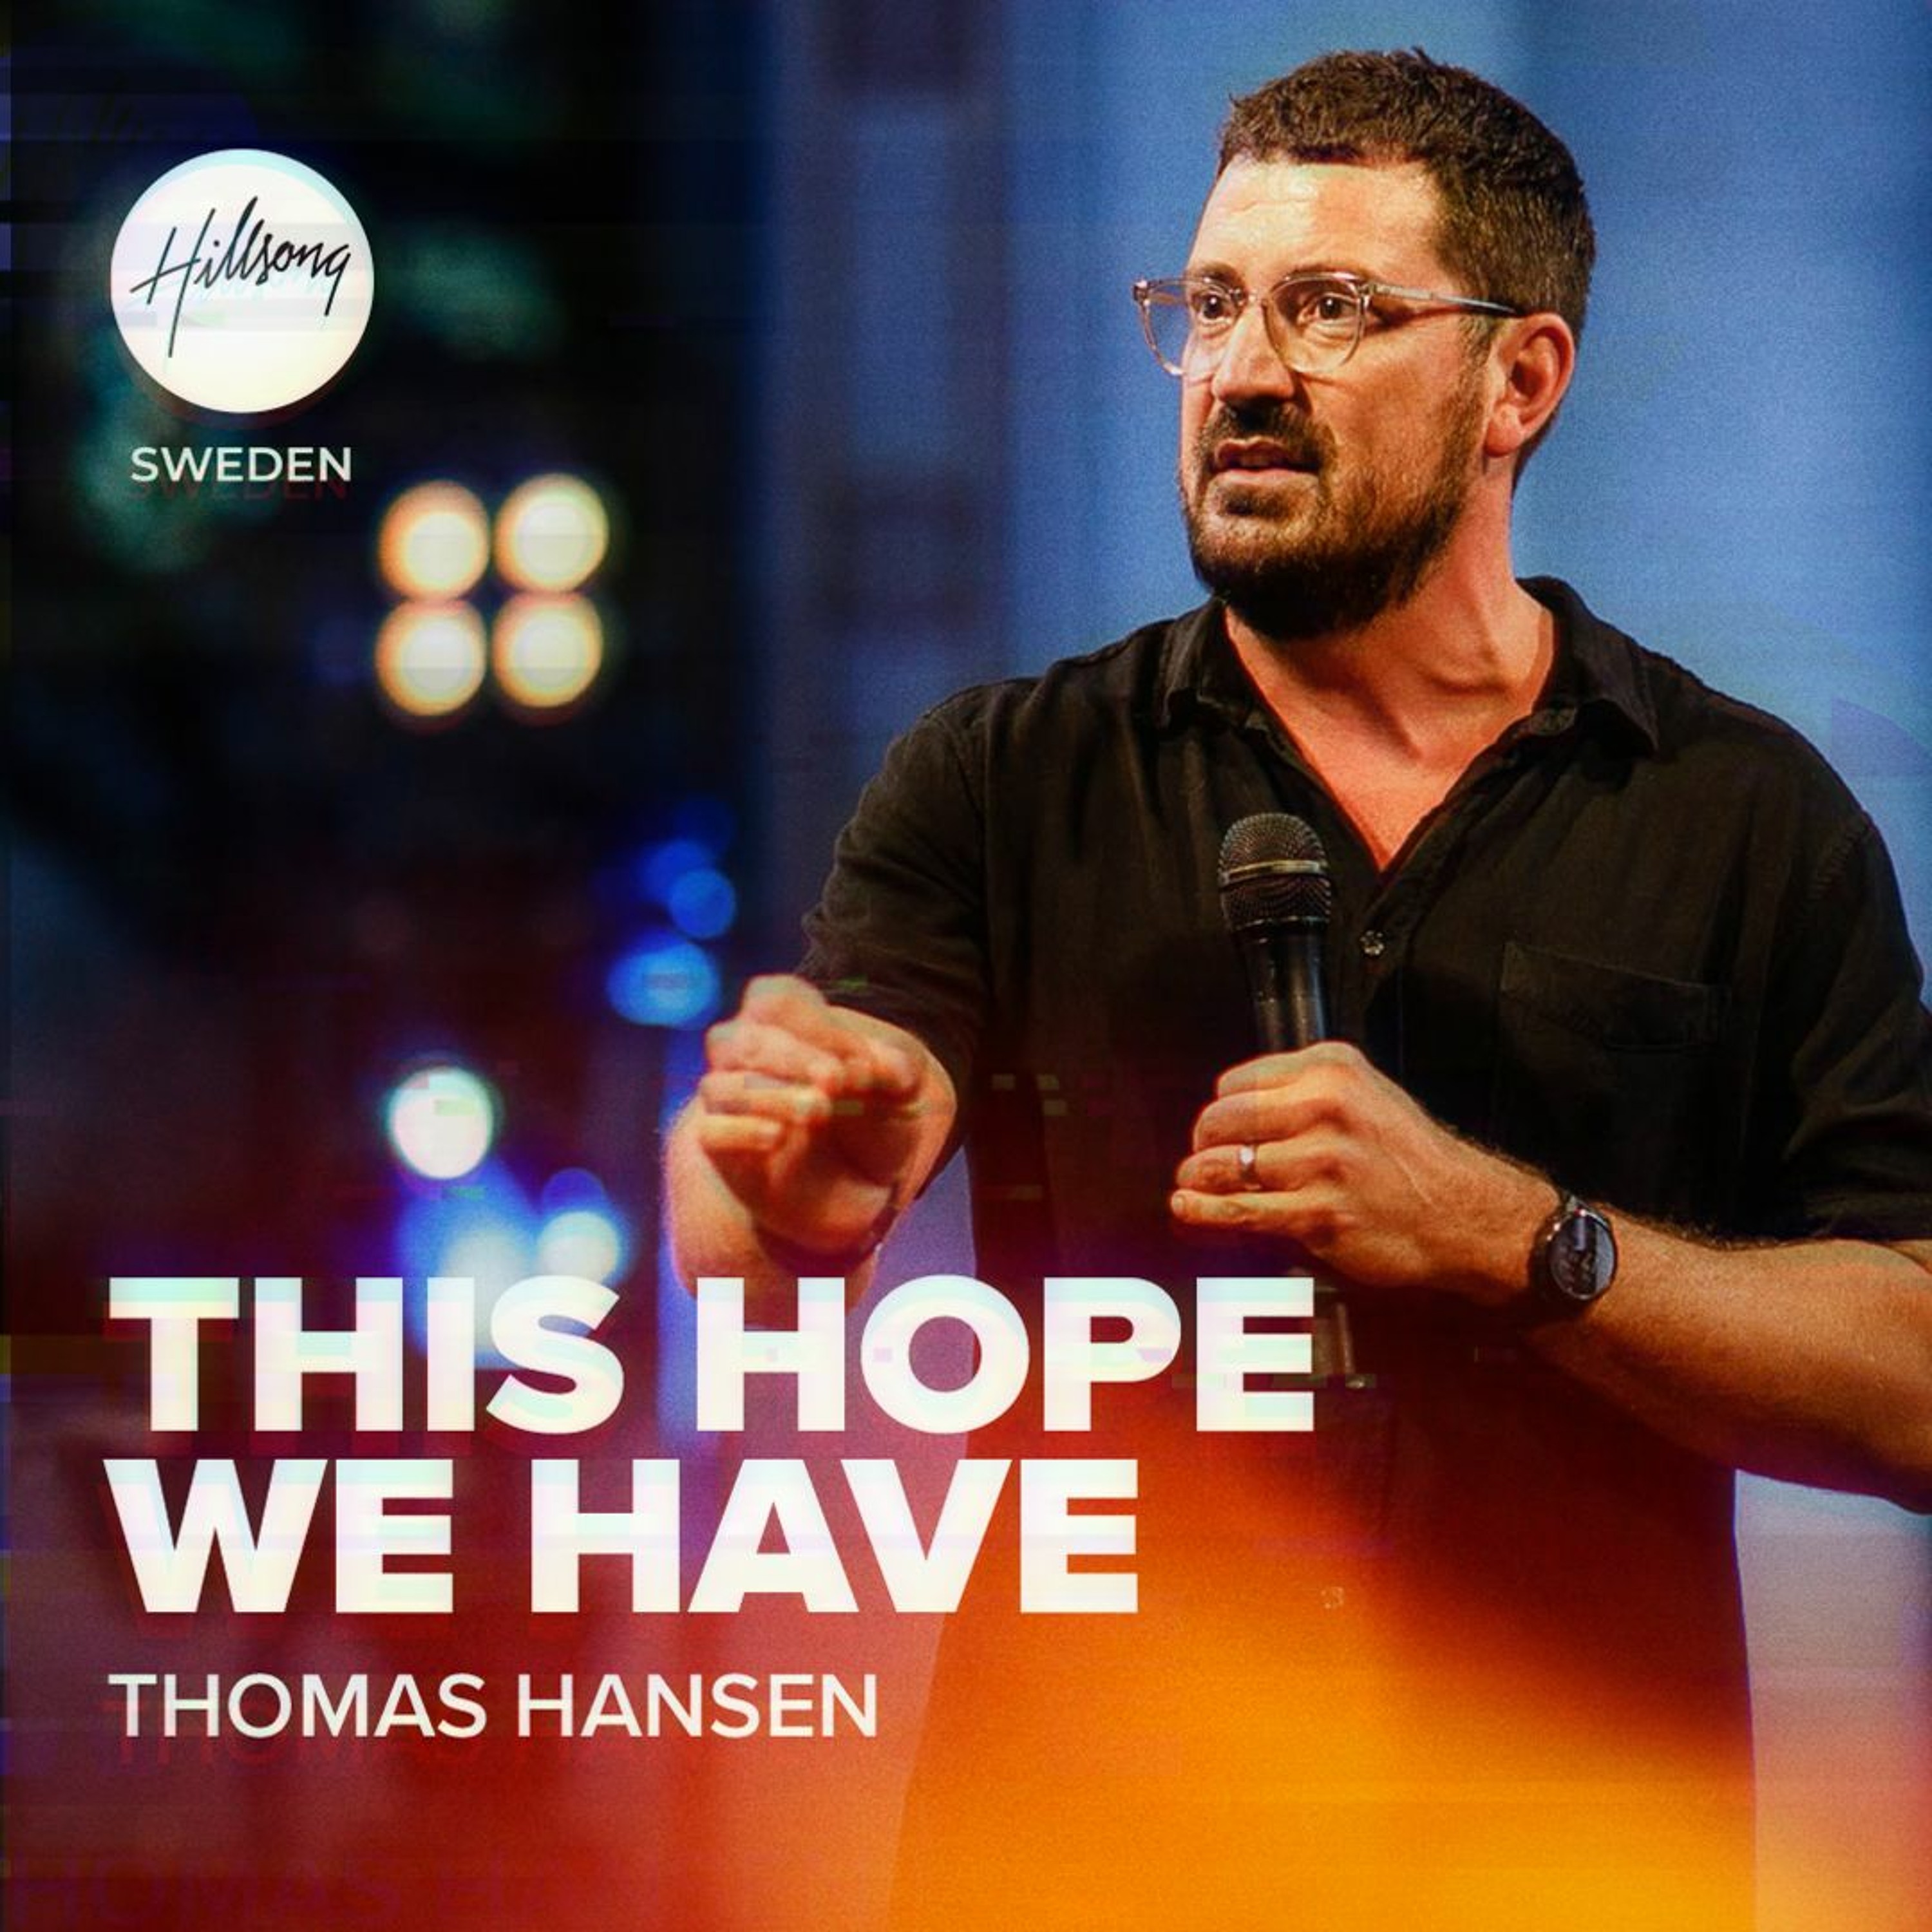 Thomas Hansen - This hope we have